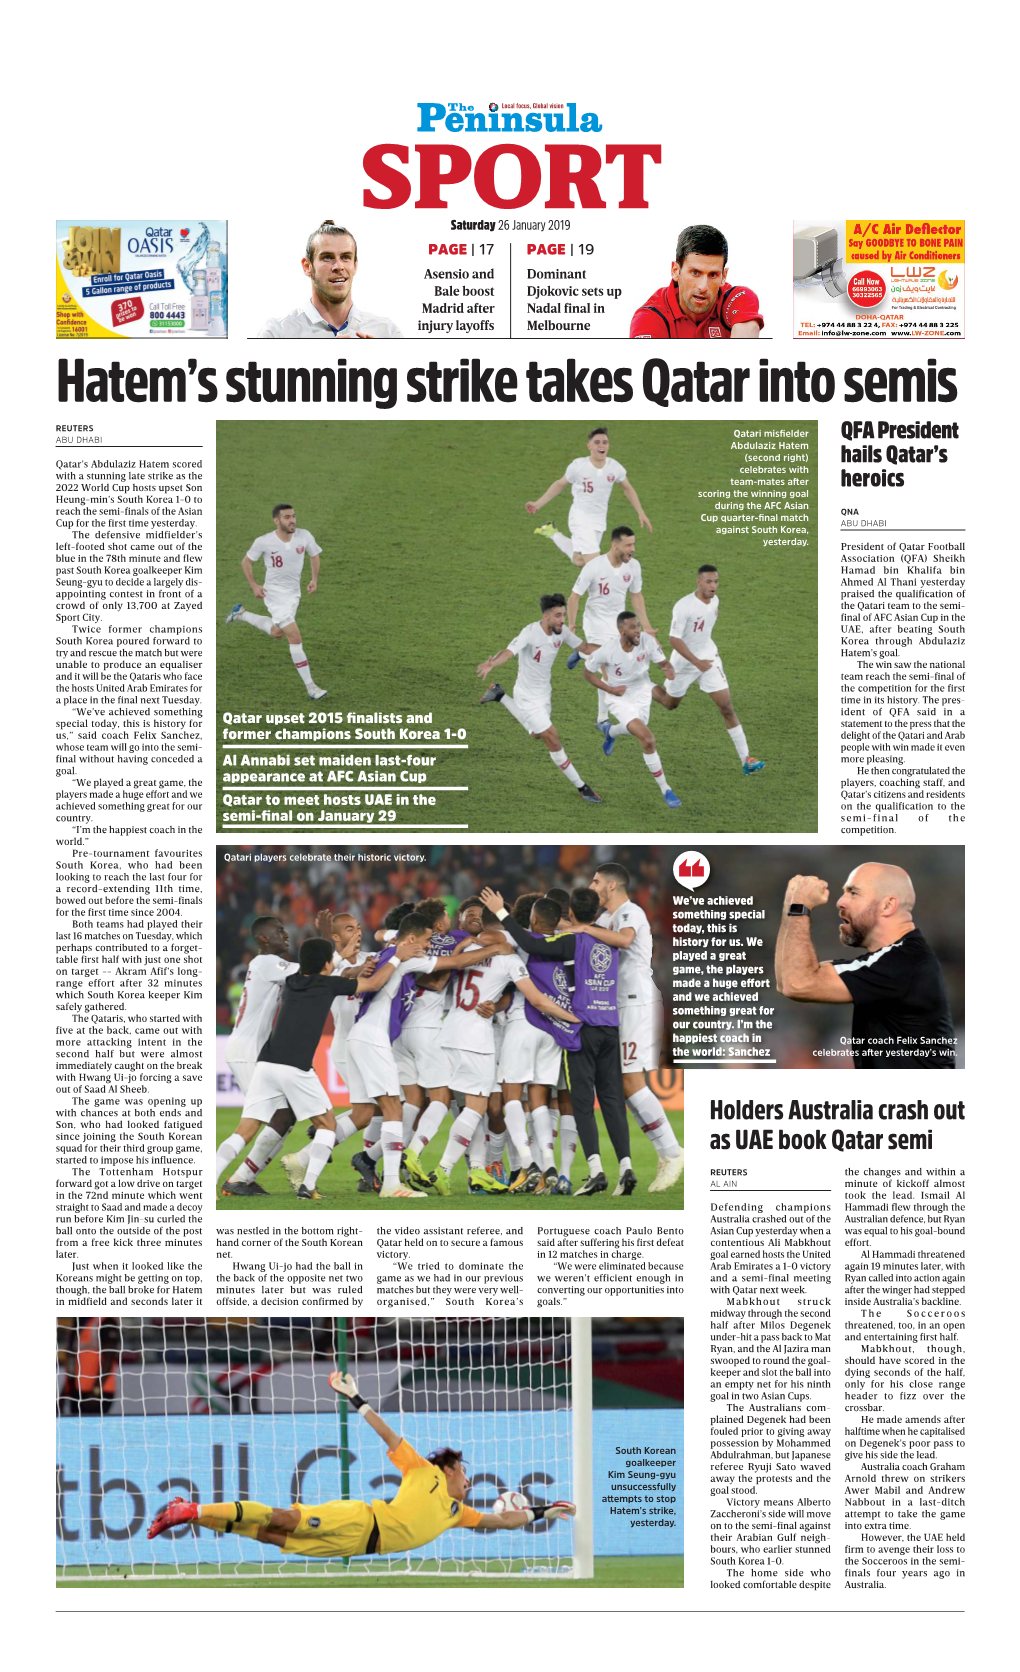 Hatem's Stunning Strike Takes Qatar Into Semis